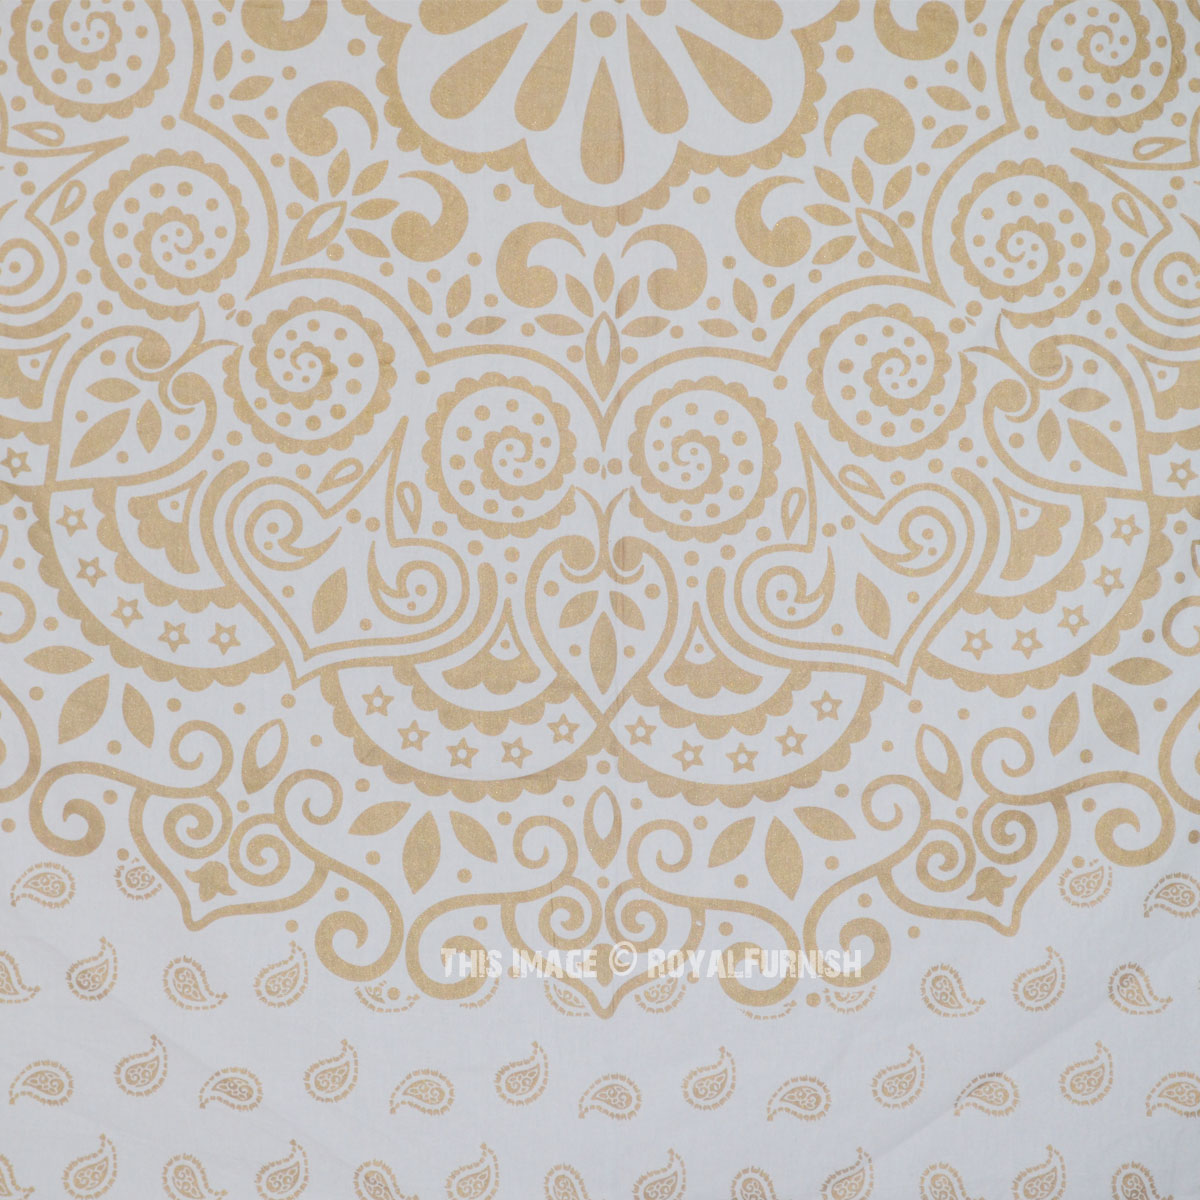 Sparkly Gold Orion Jewel Mandala Wall Tapestry - RoyalFurnish.com